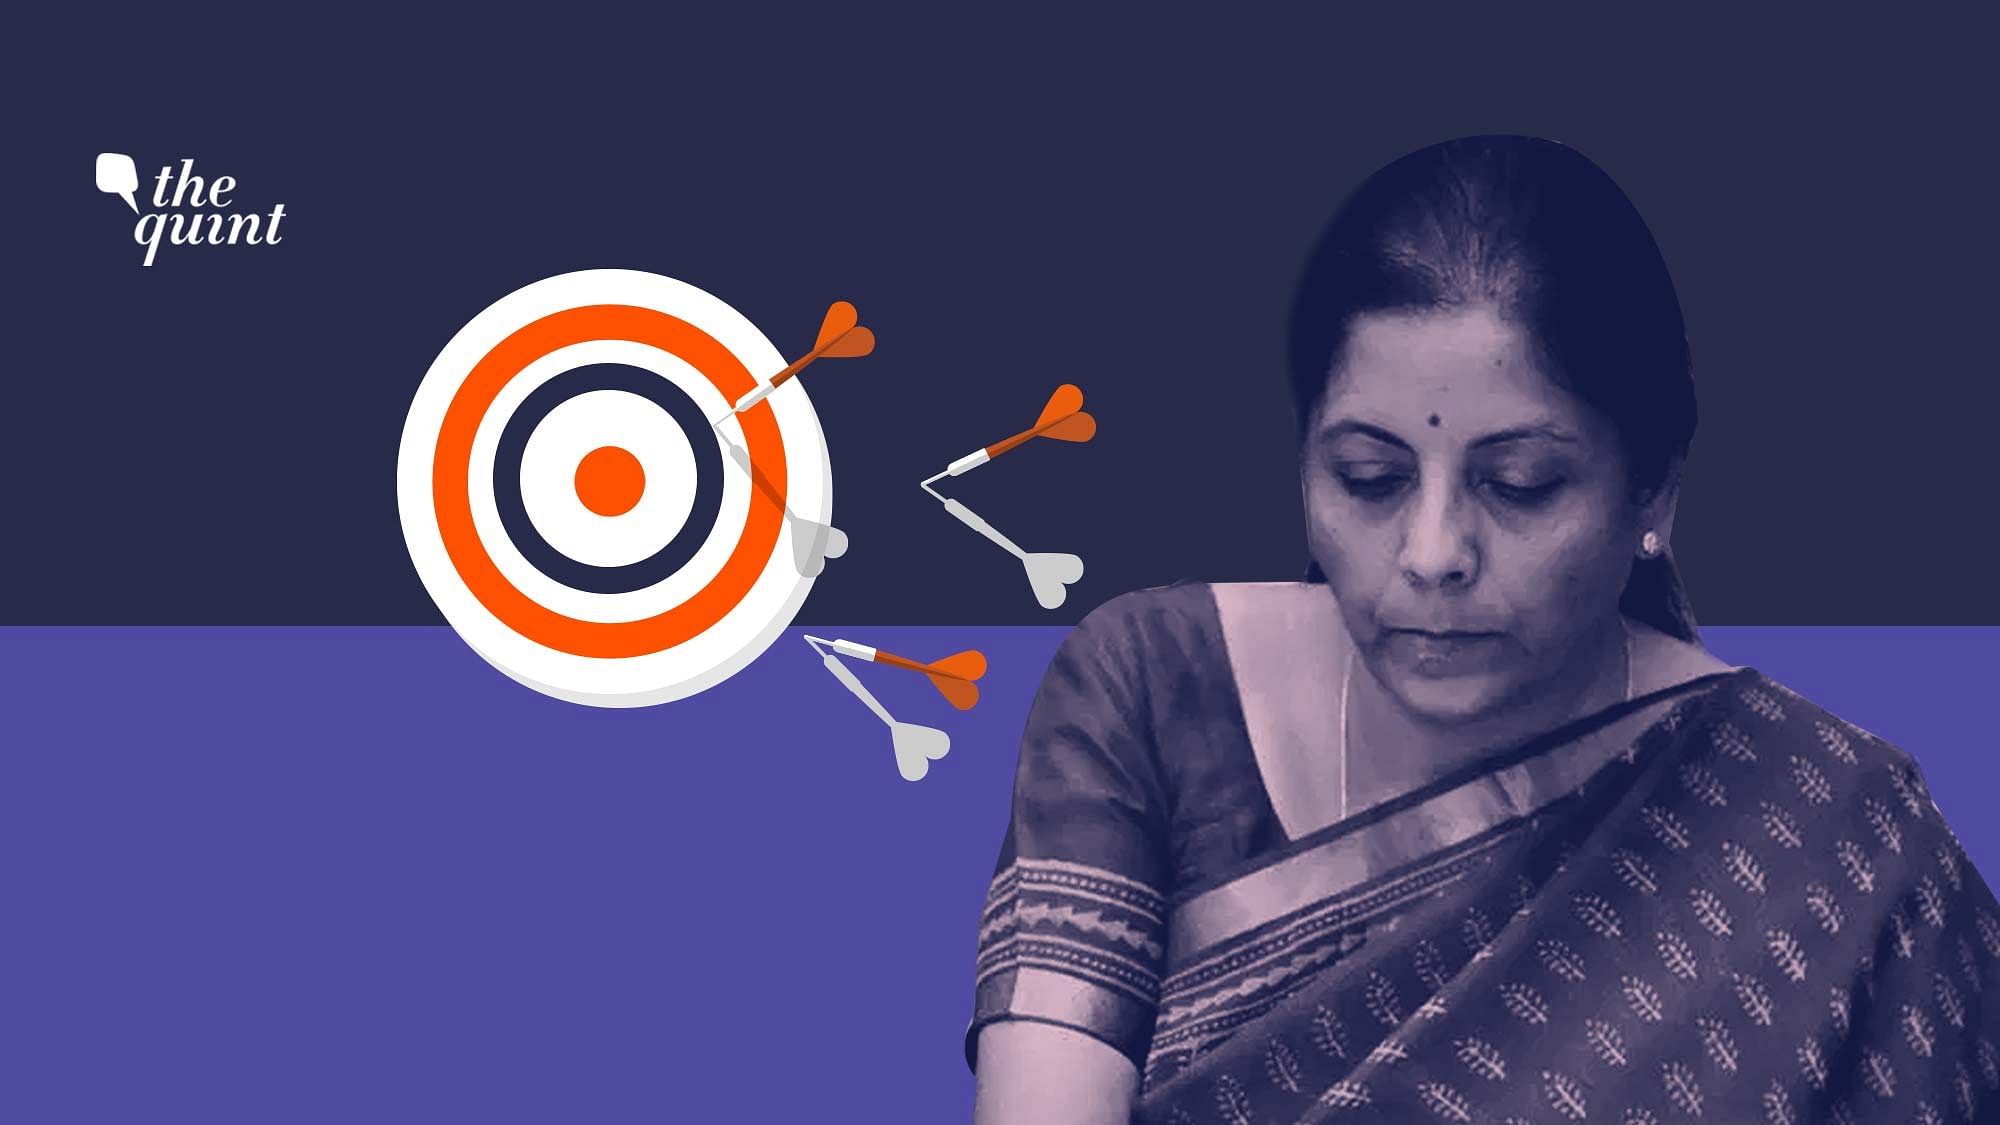 Image of FM Nirmala Sitharaman used for representational purposes.